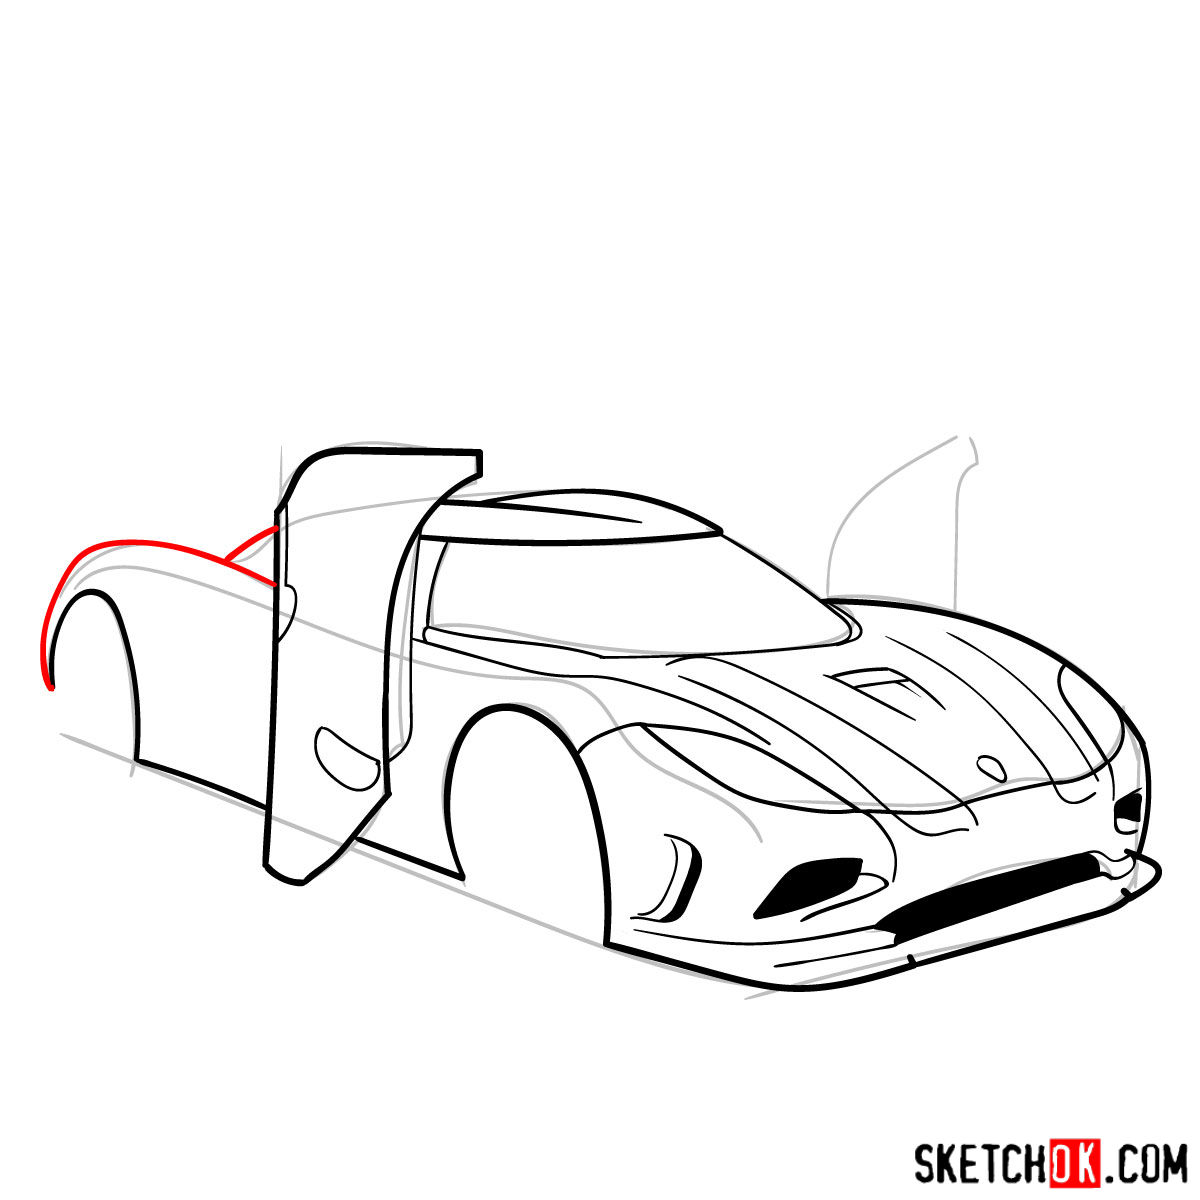 How to draw Koenigsegg Agera R Oman - step 08